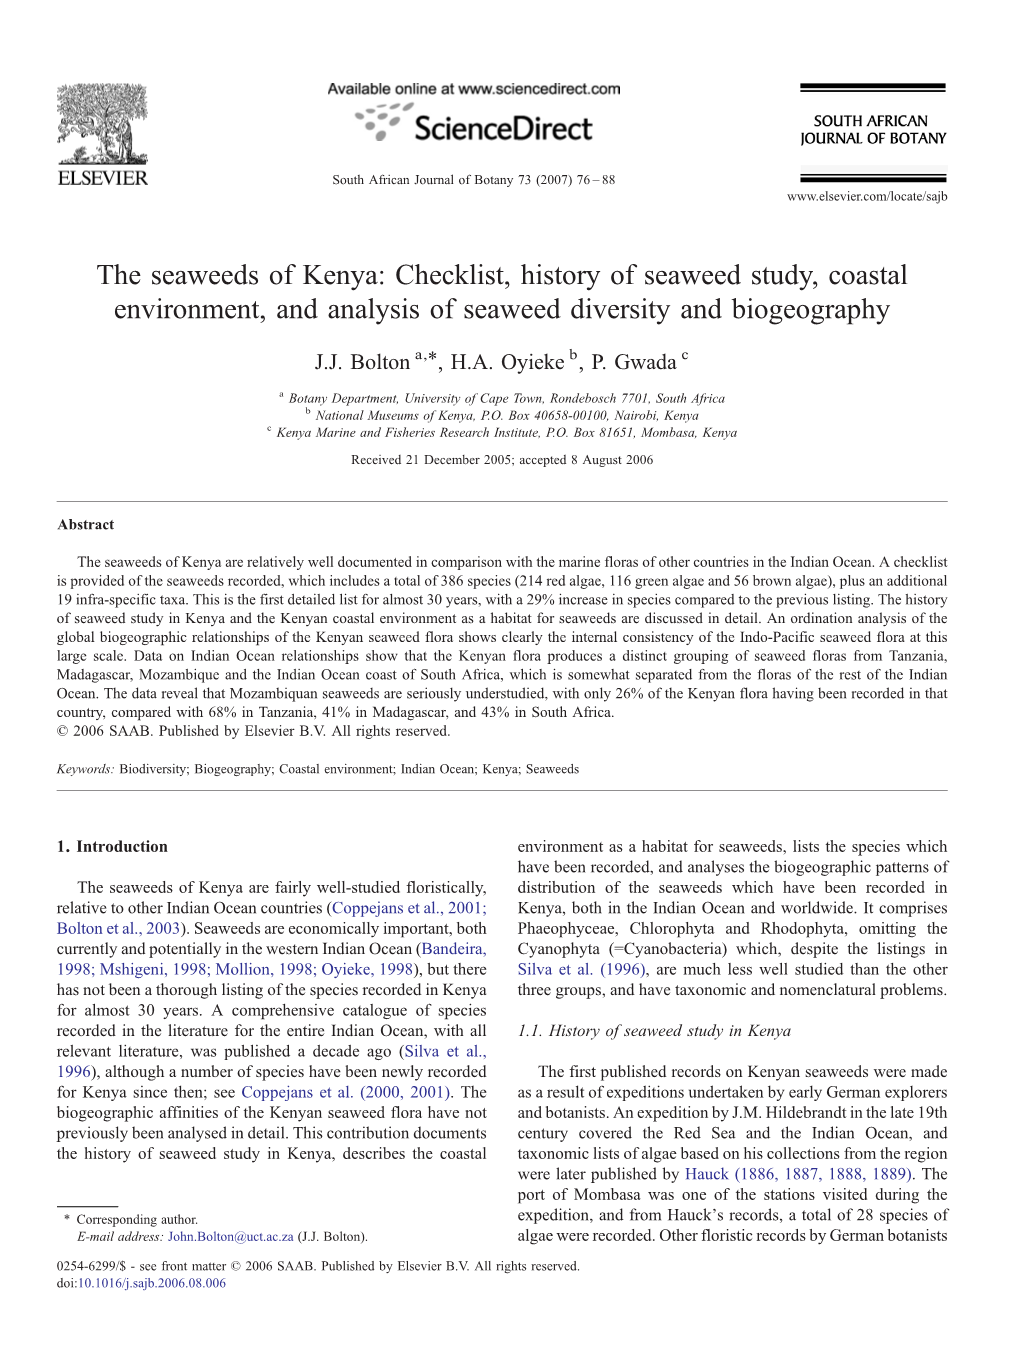 The Seaweeds of Kenya: Checklist, History of Seaweed Study, Coastal Environment, and Analysis of Seaweed Diversity and Biogeography ⁎ J.J